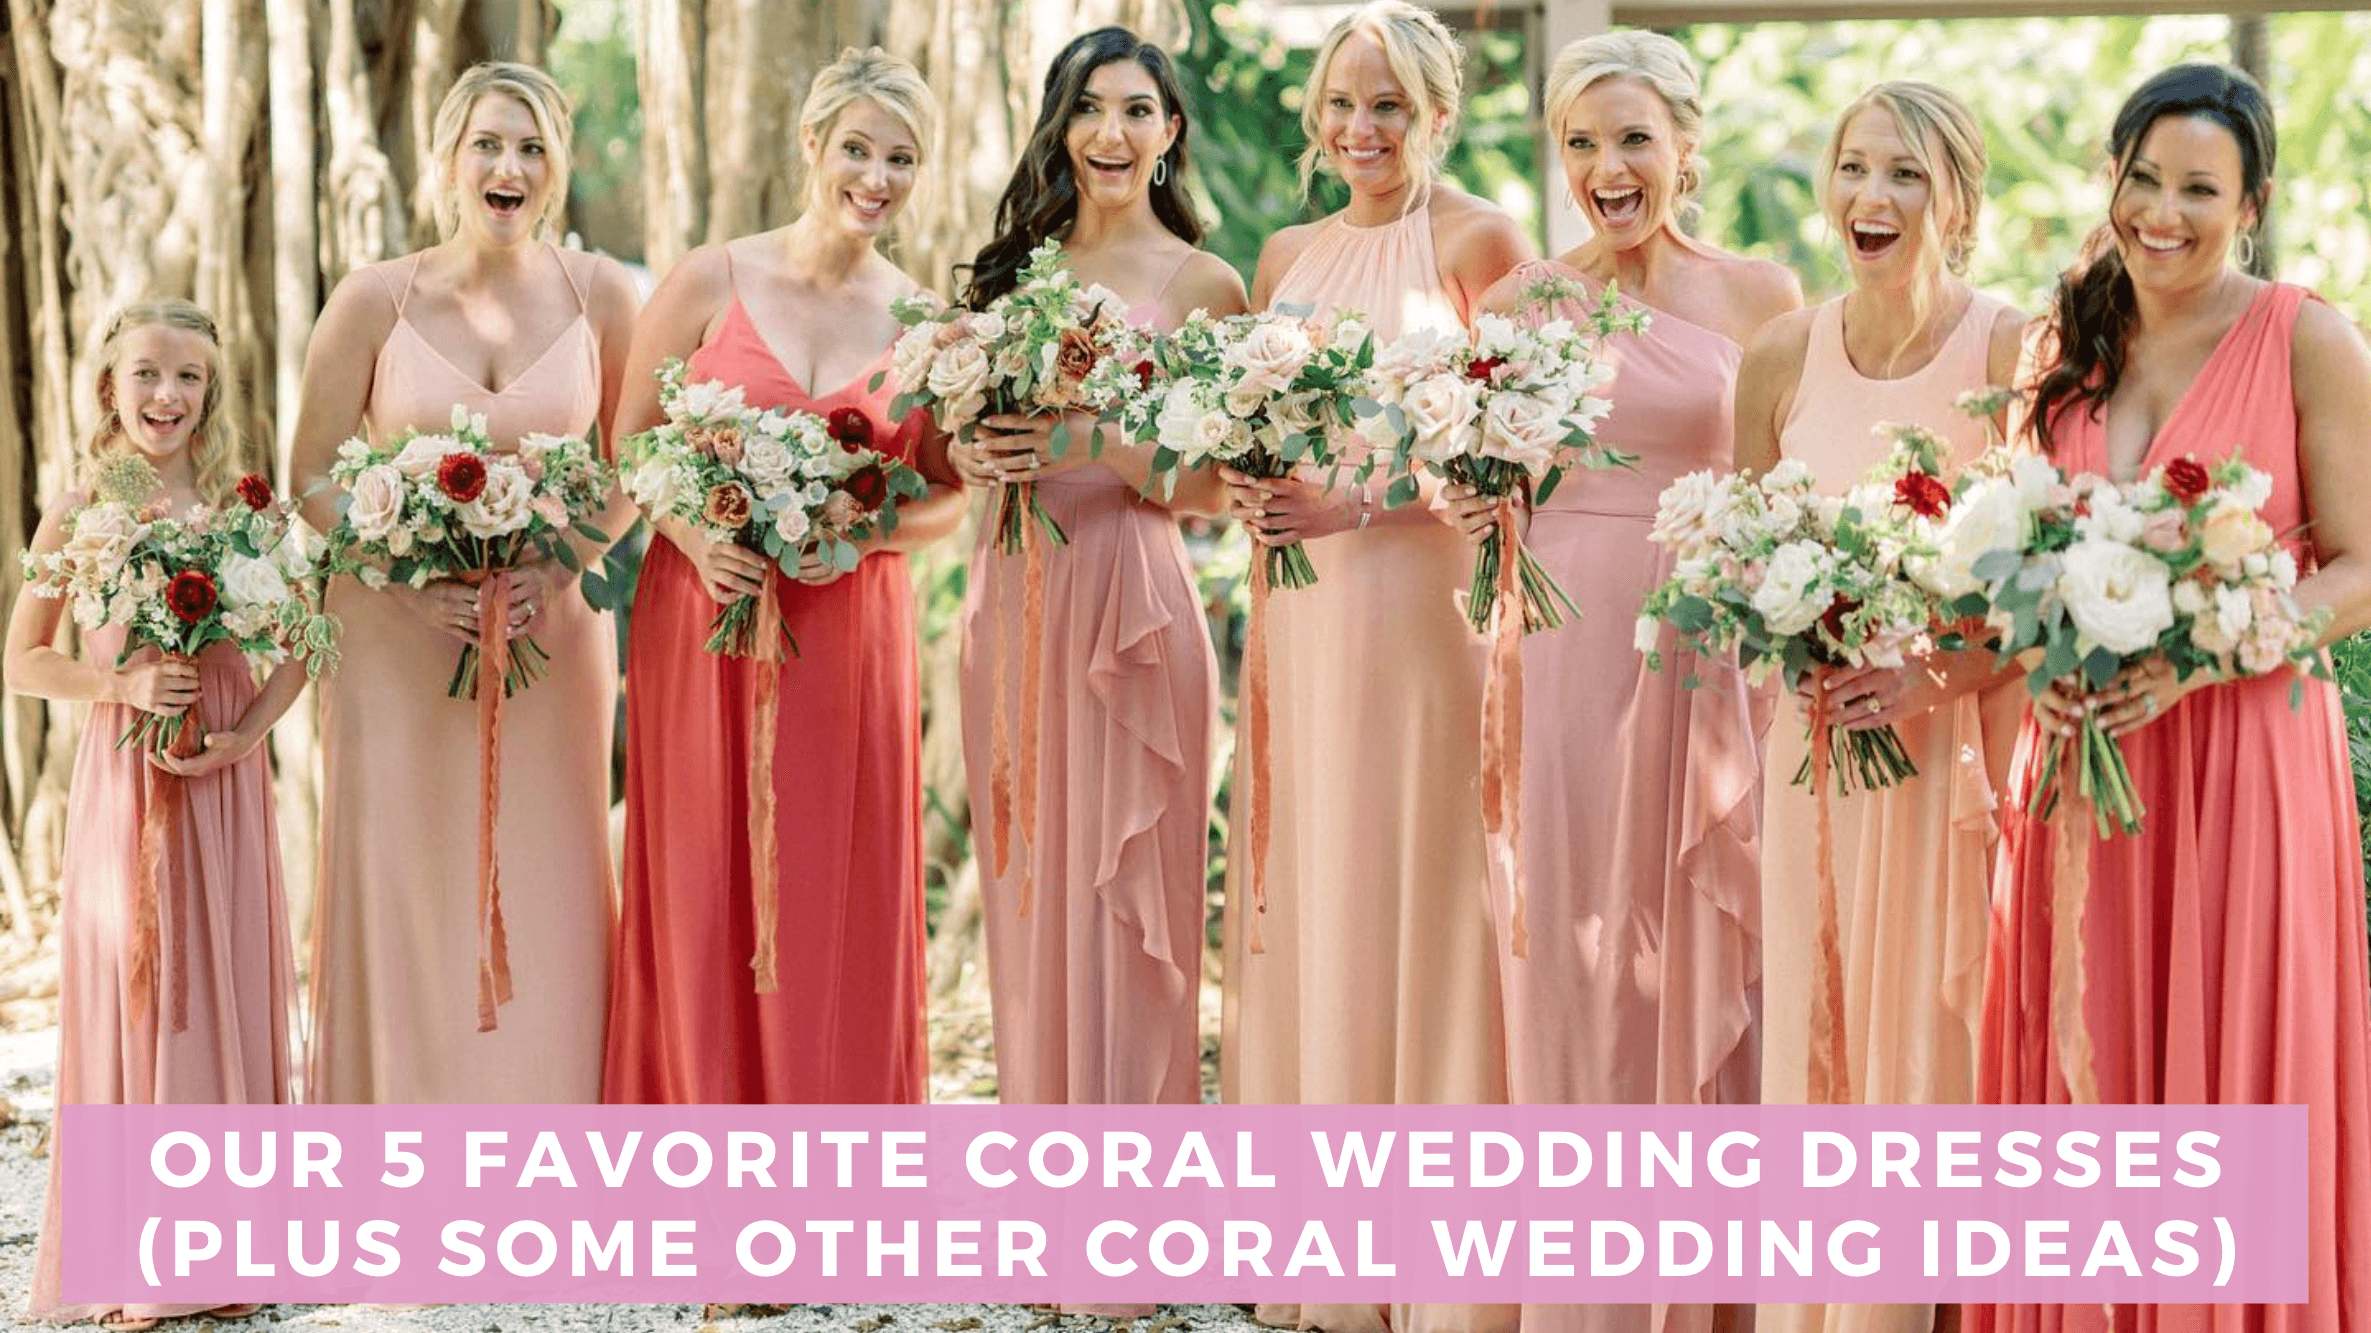 Gift Coral Infinity Bridesmaid Bridal Party Coral Gifts Wedding